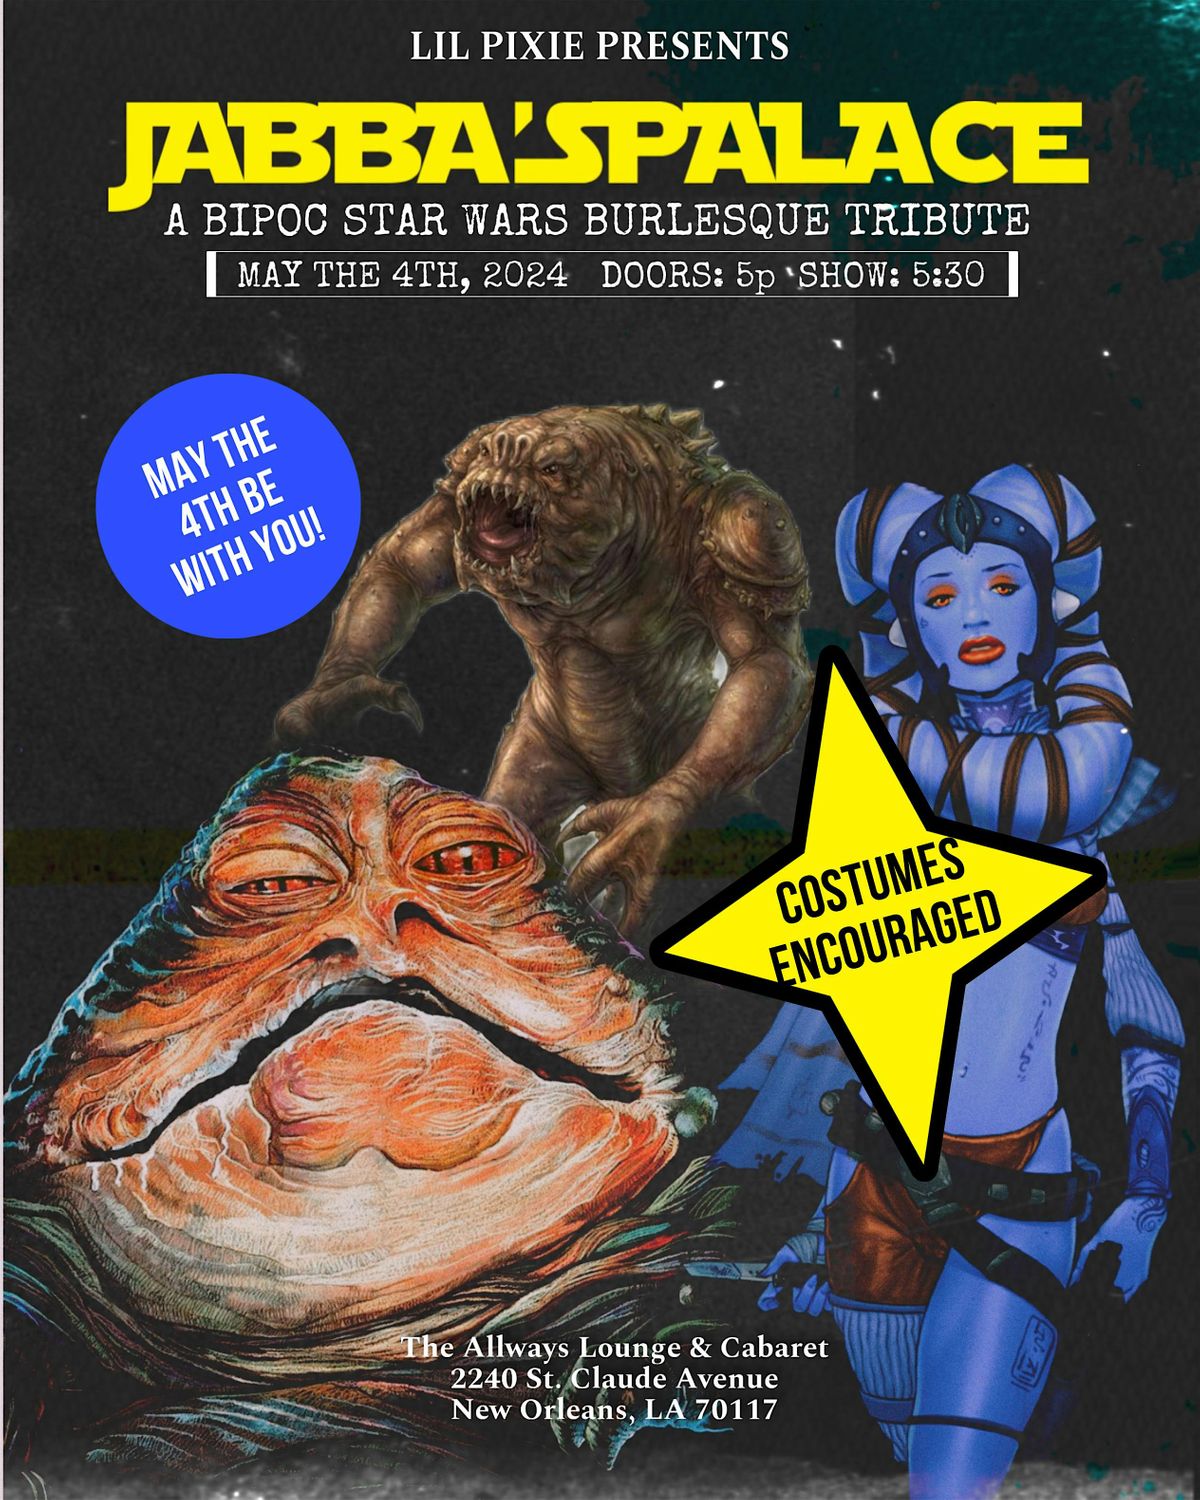 Jabba's Palace: A Star Wars Burlesque